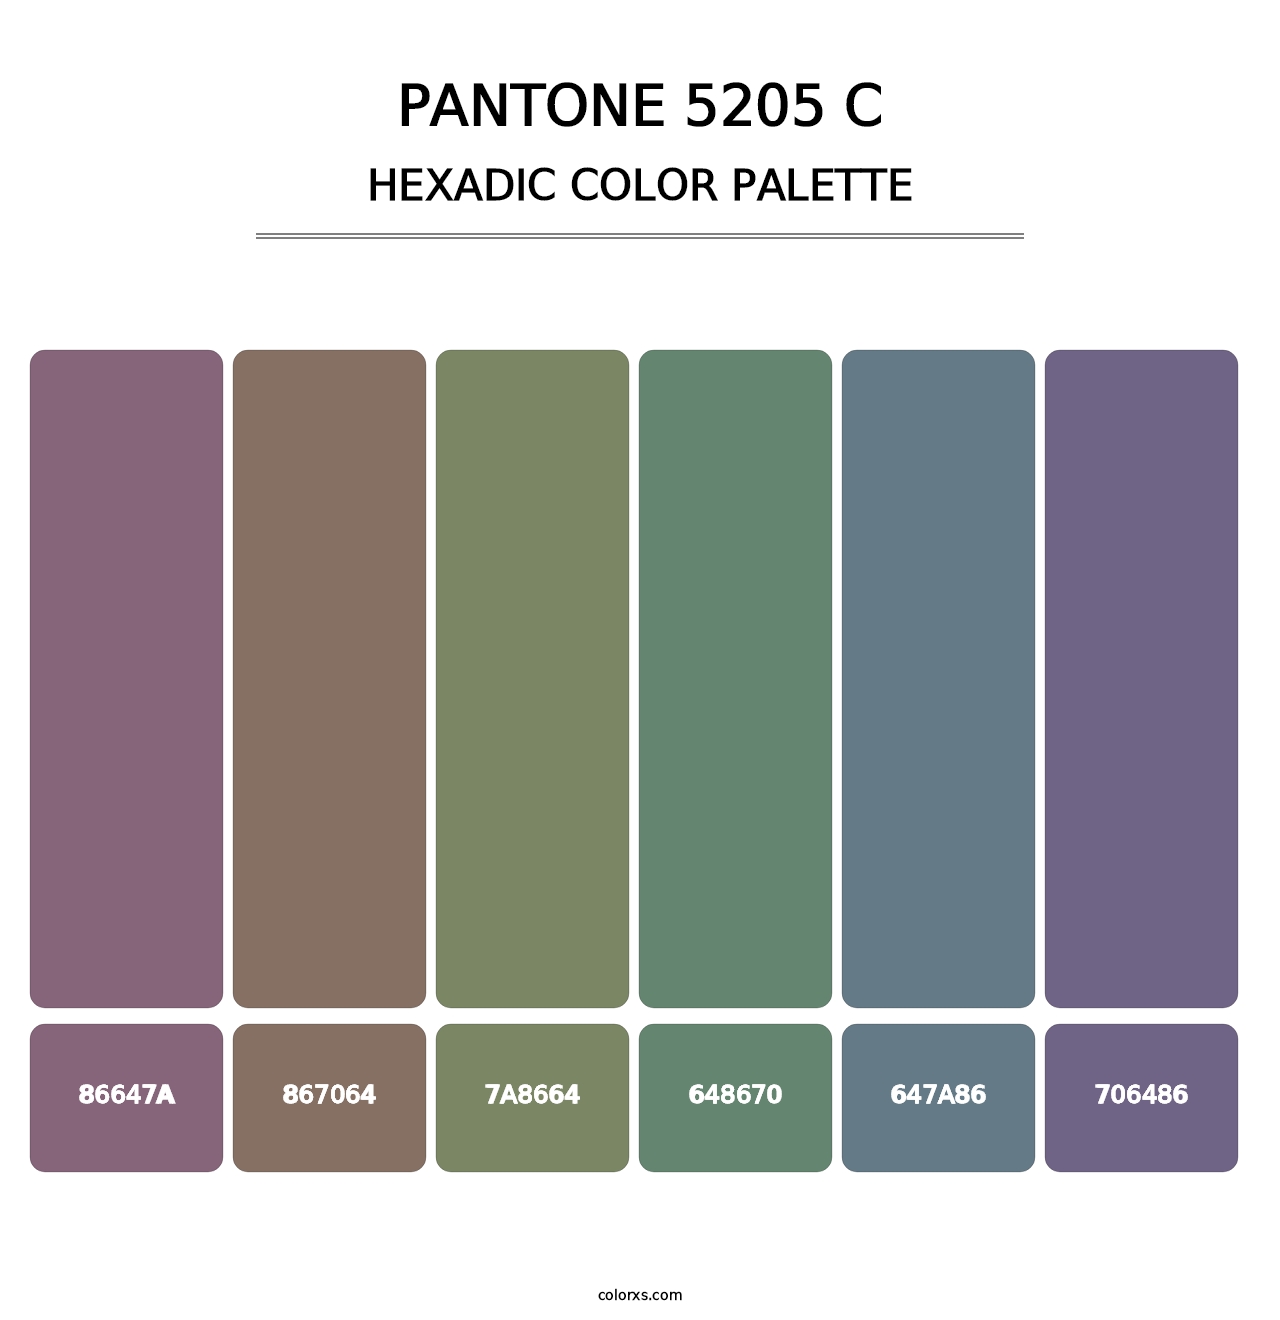 PANTONE 5205 C - Hexadic Color Palette